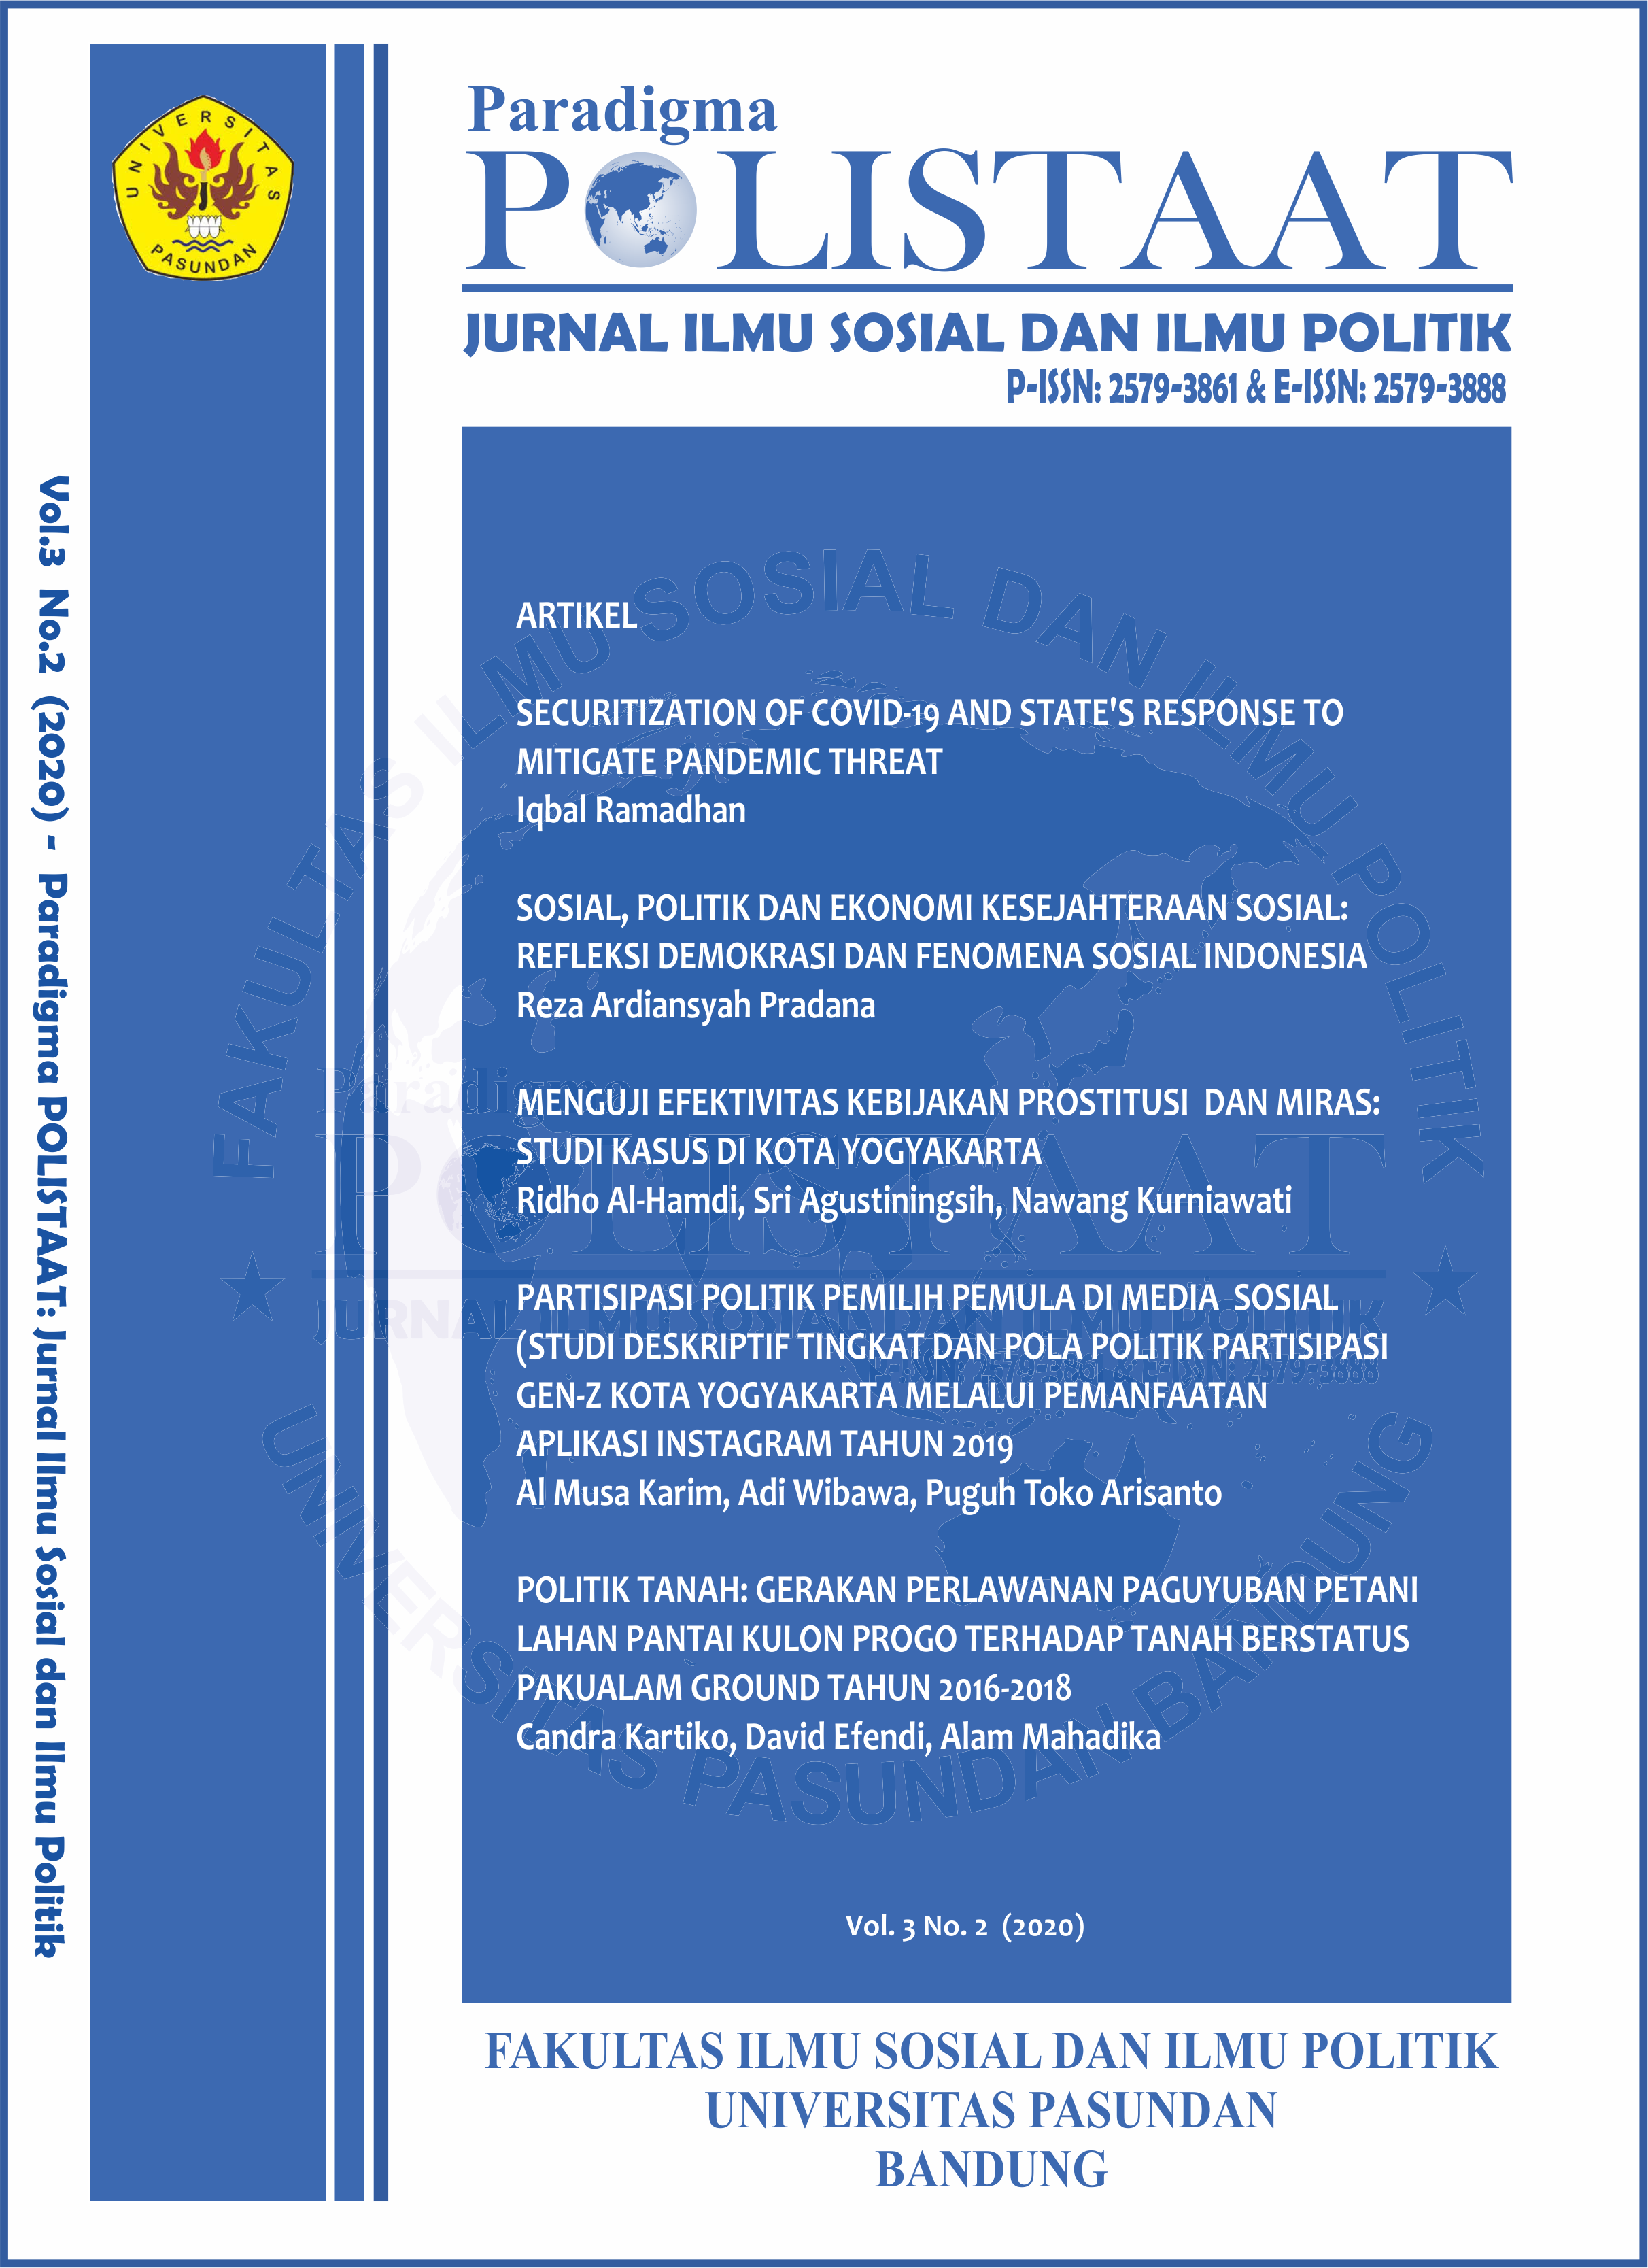 					View Vol. 3 No. 2 (2020): Paradigma POLISTAAT: Jurnal Ilmu Sosial dan Ilmu Politik
				